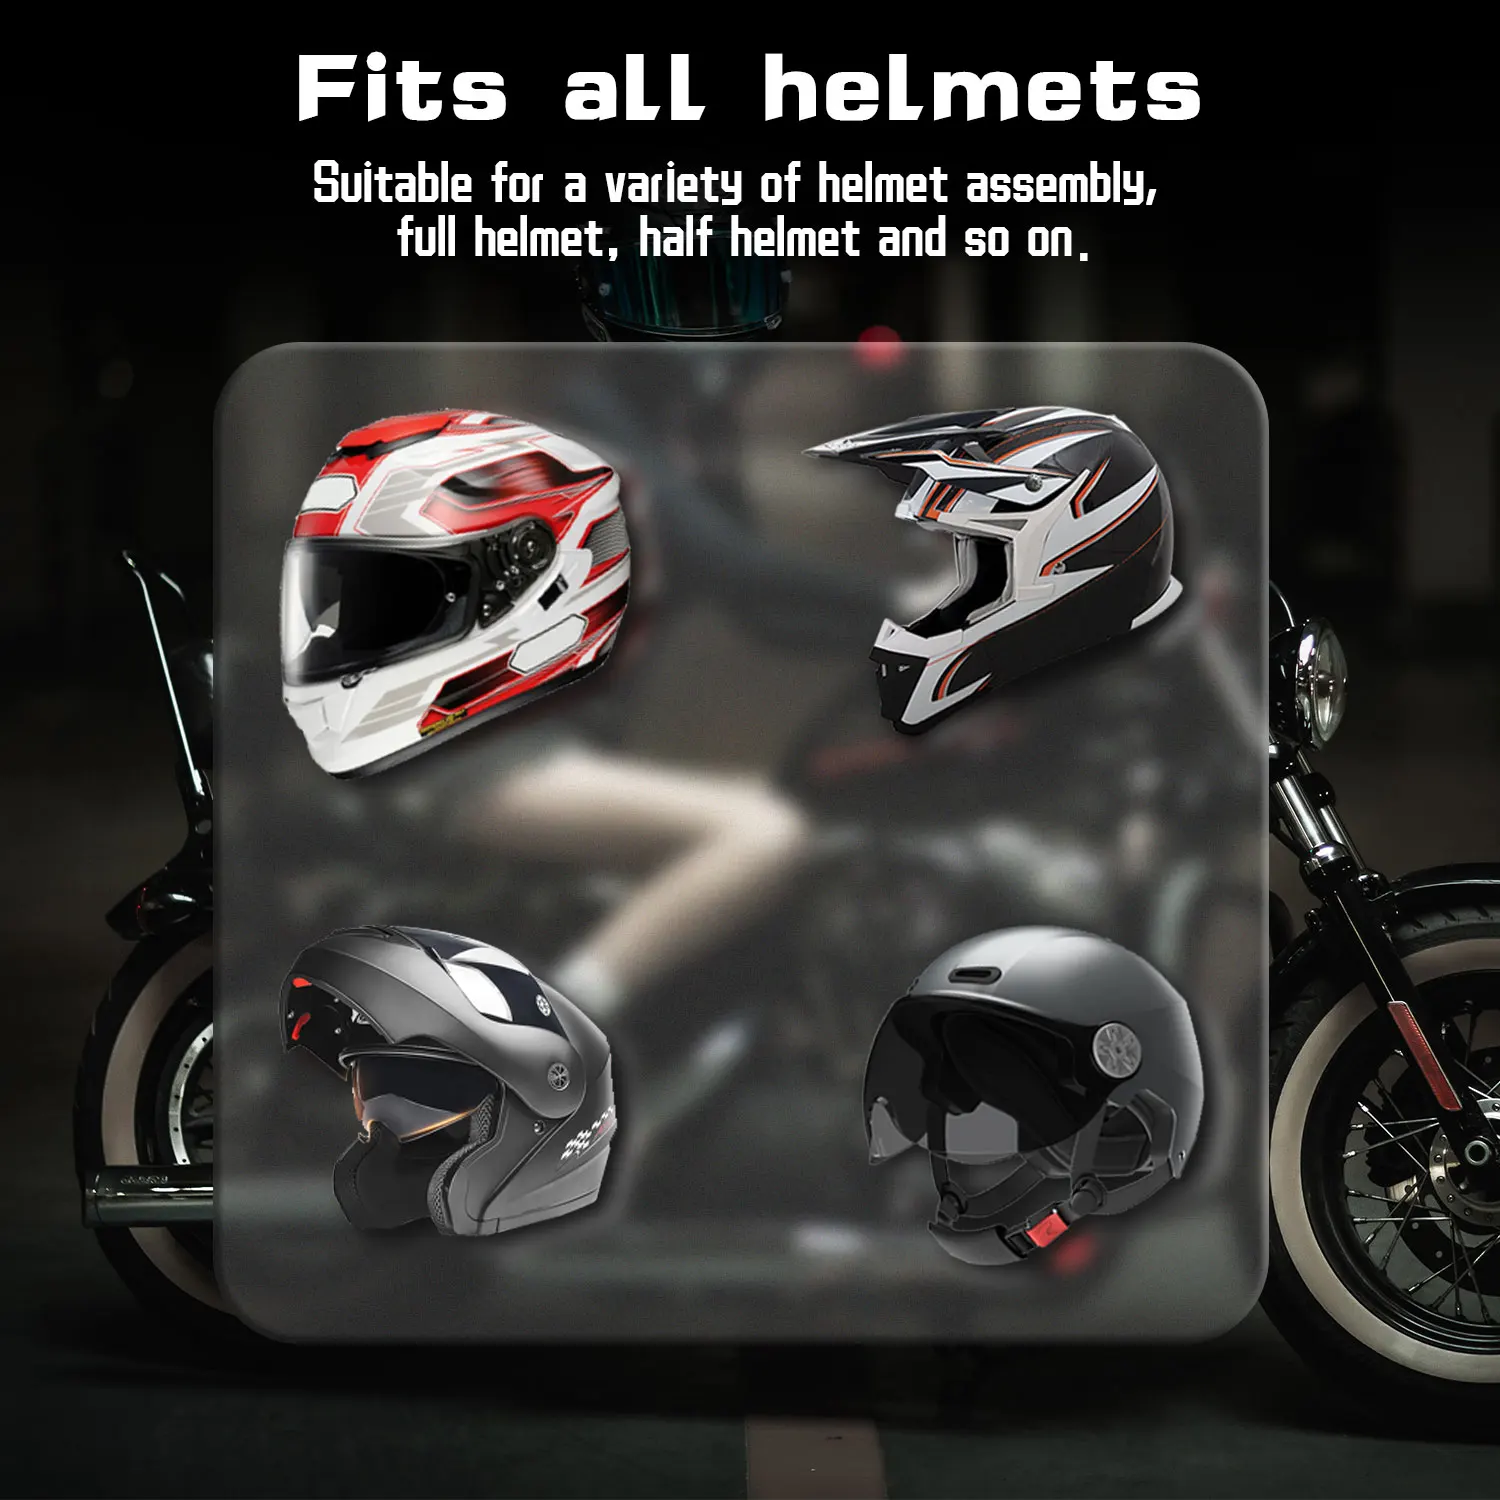 2000m 8 Riders Group Motorcycle Helmet Bluetooth Headset Communication Systems Kit Handsfree/Siri Google Assistant/Waterproof/GPS/4 Mic/2 Pack Fodsports M1-S Pro Motorcycle Bluetooth Intercom 